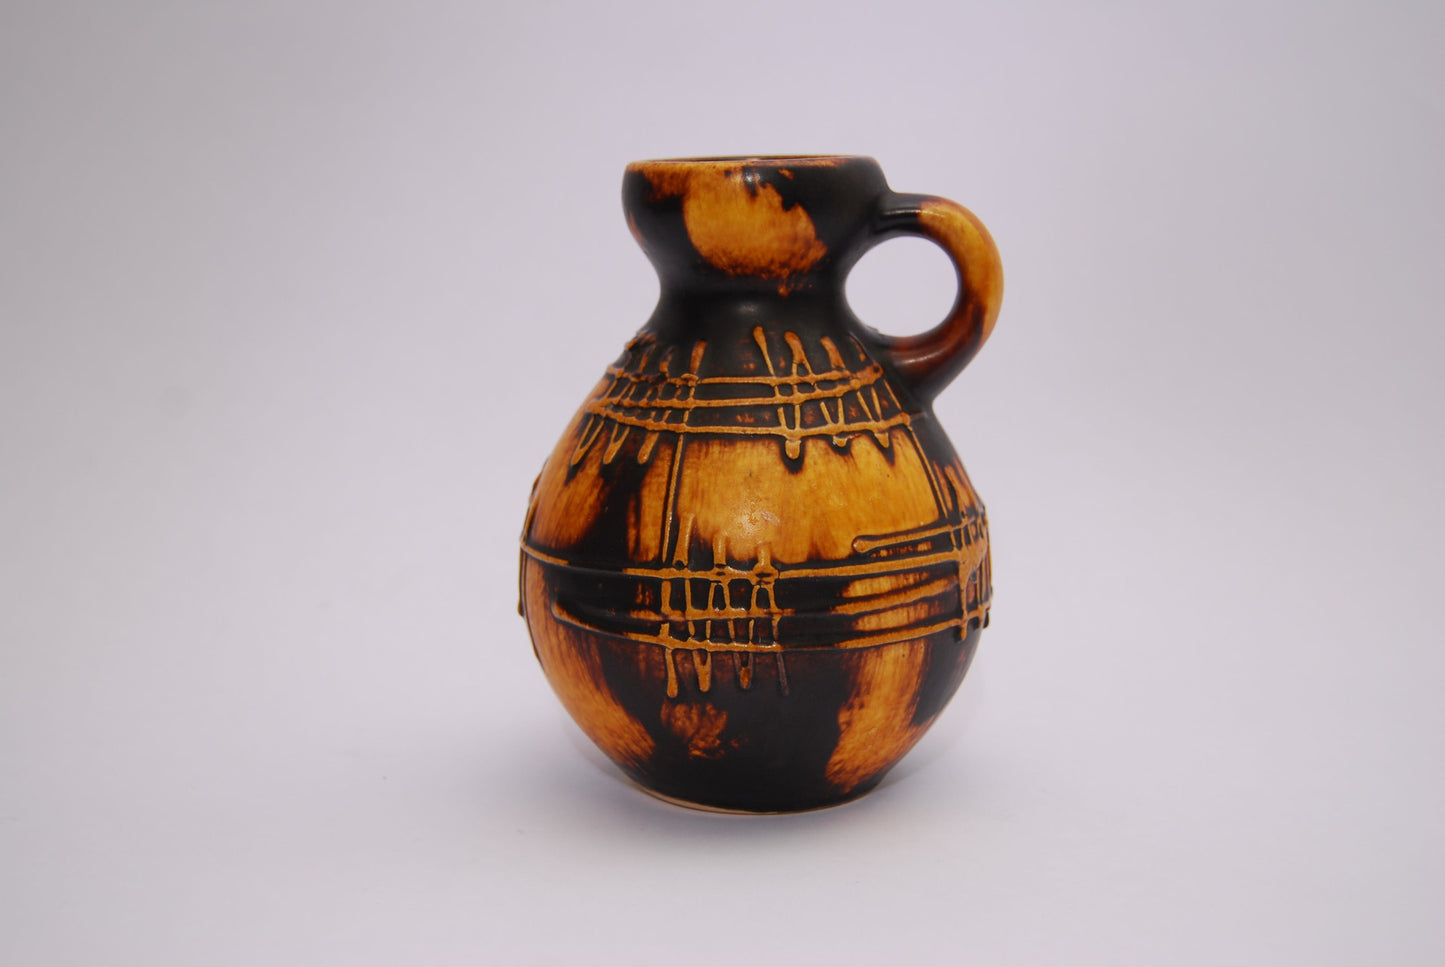 West German ceramic jug